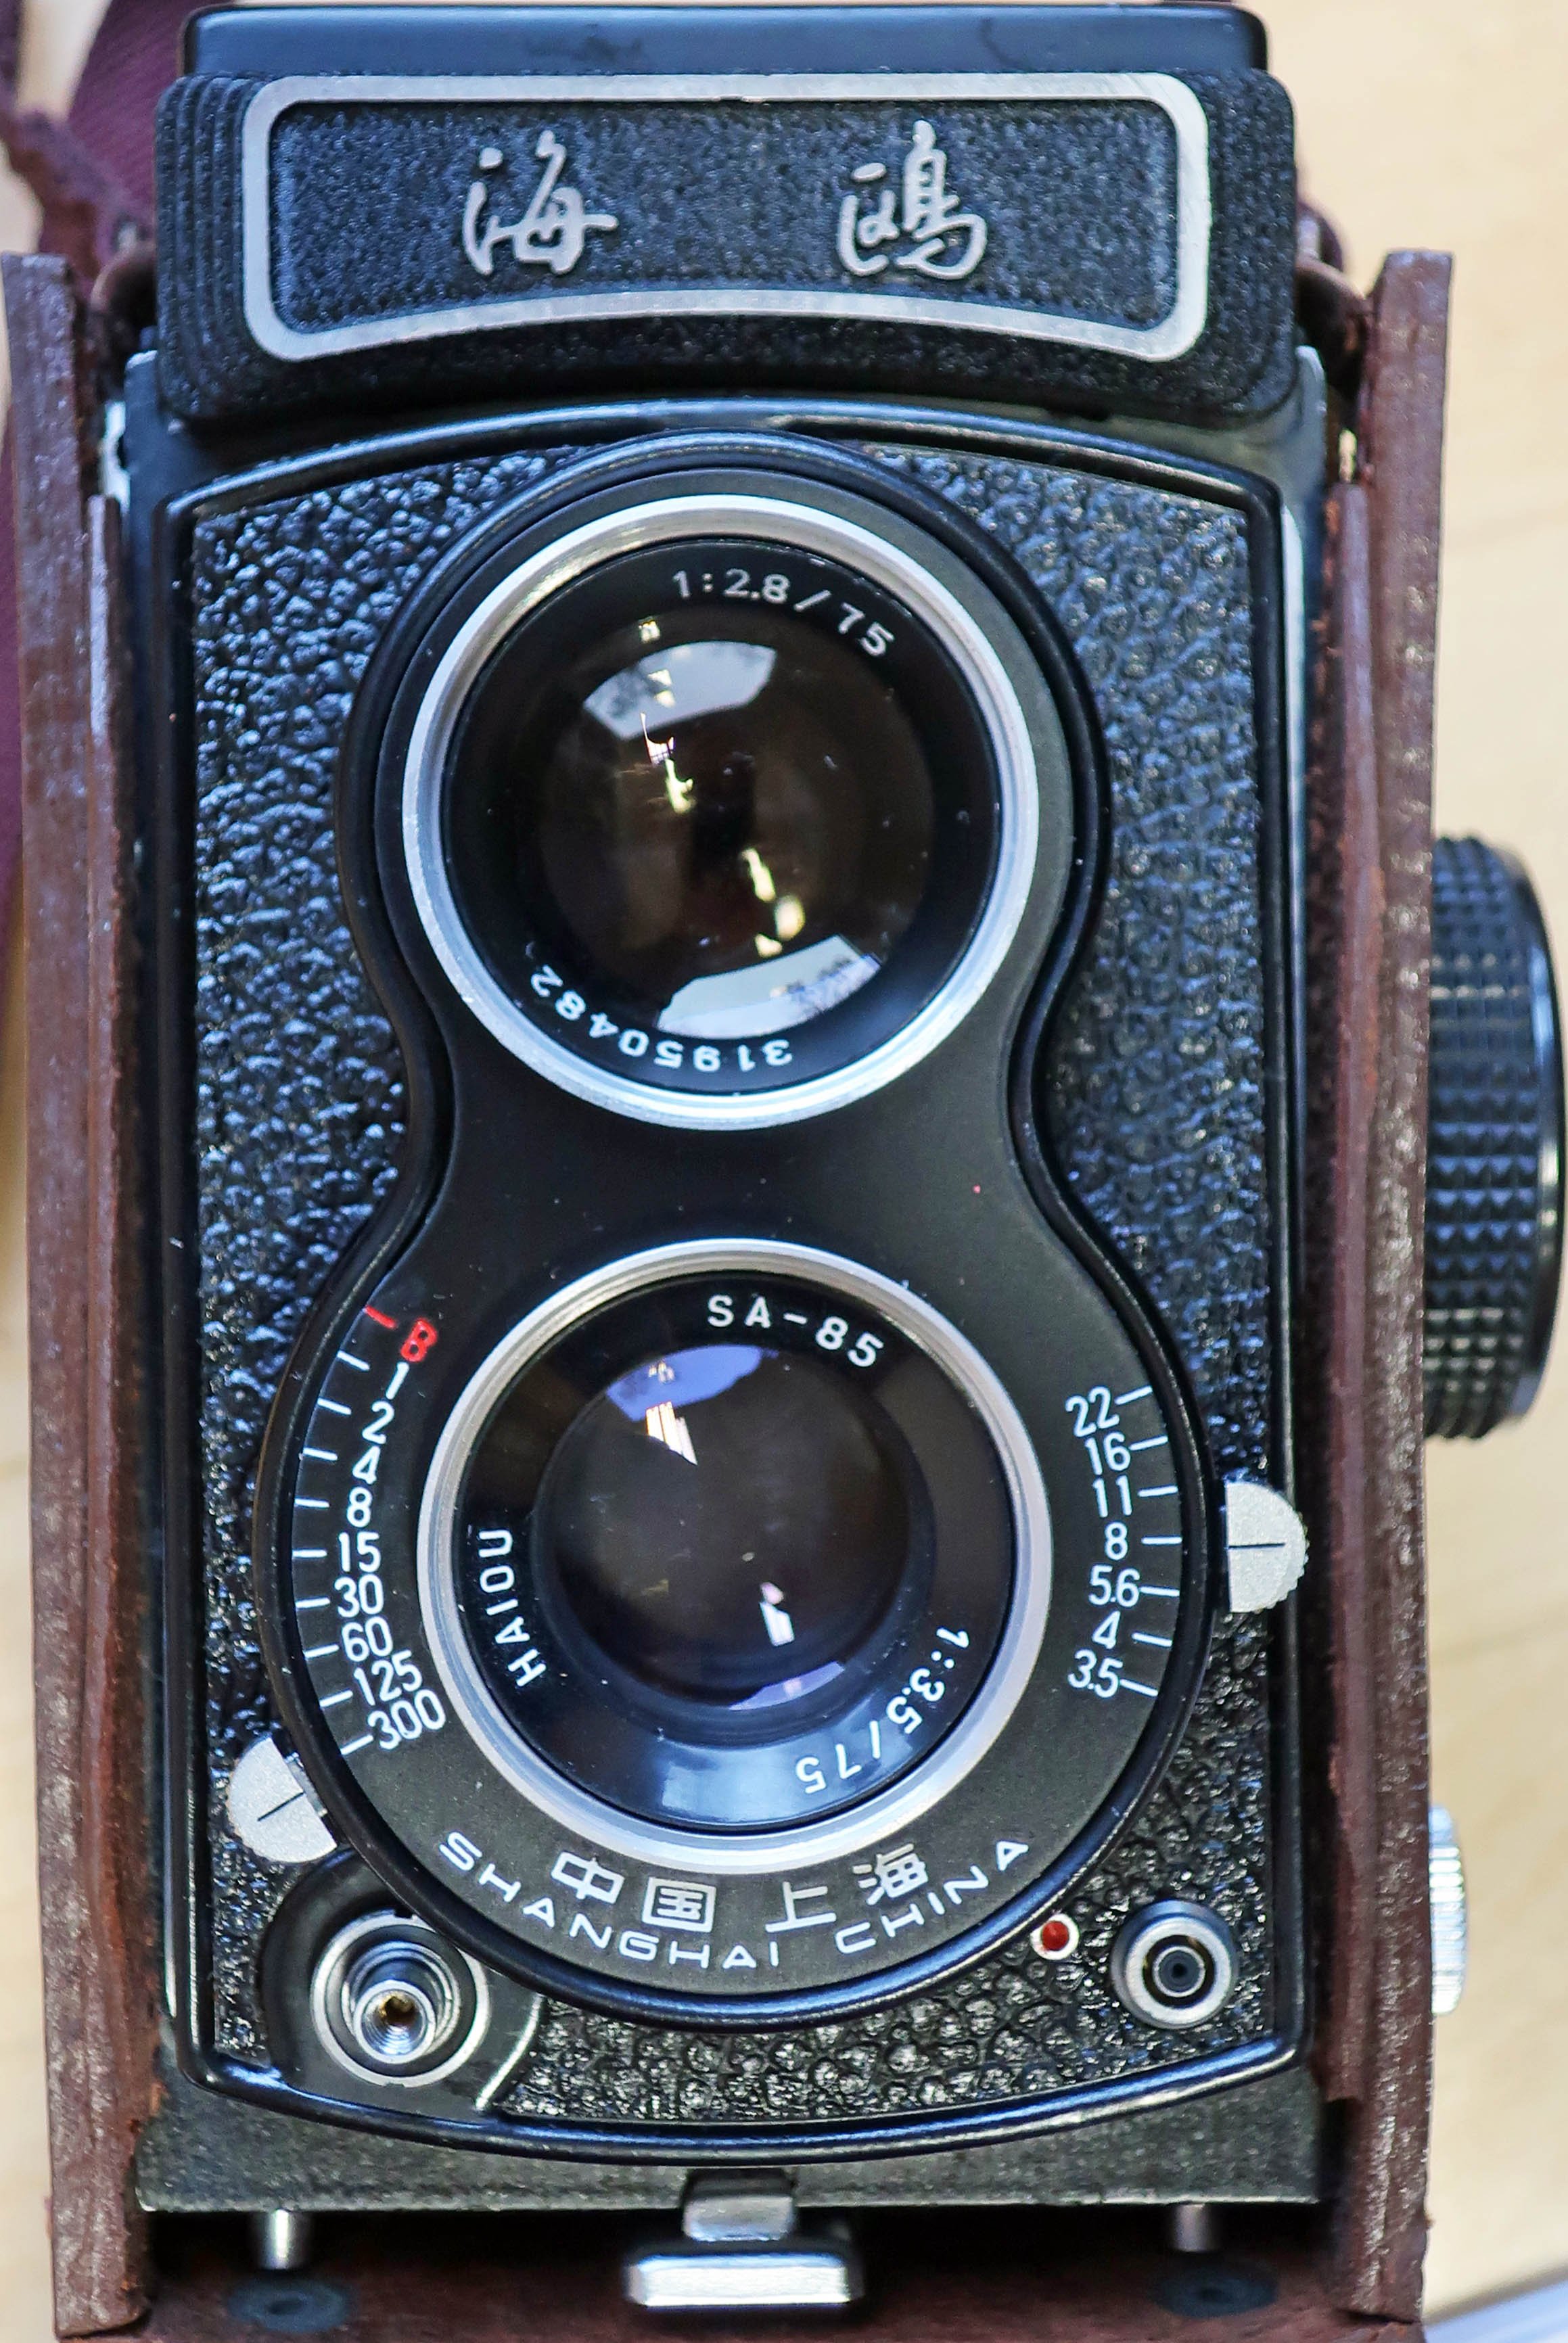 Großbildkamera	SEAGULL (museum comp:ex CC BY-NC-SA)